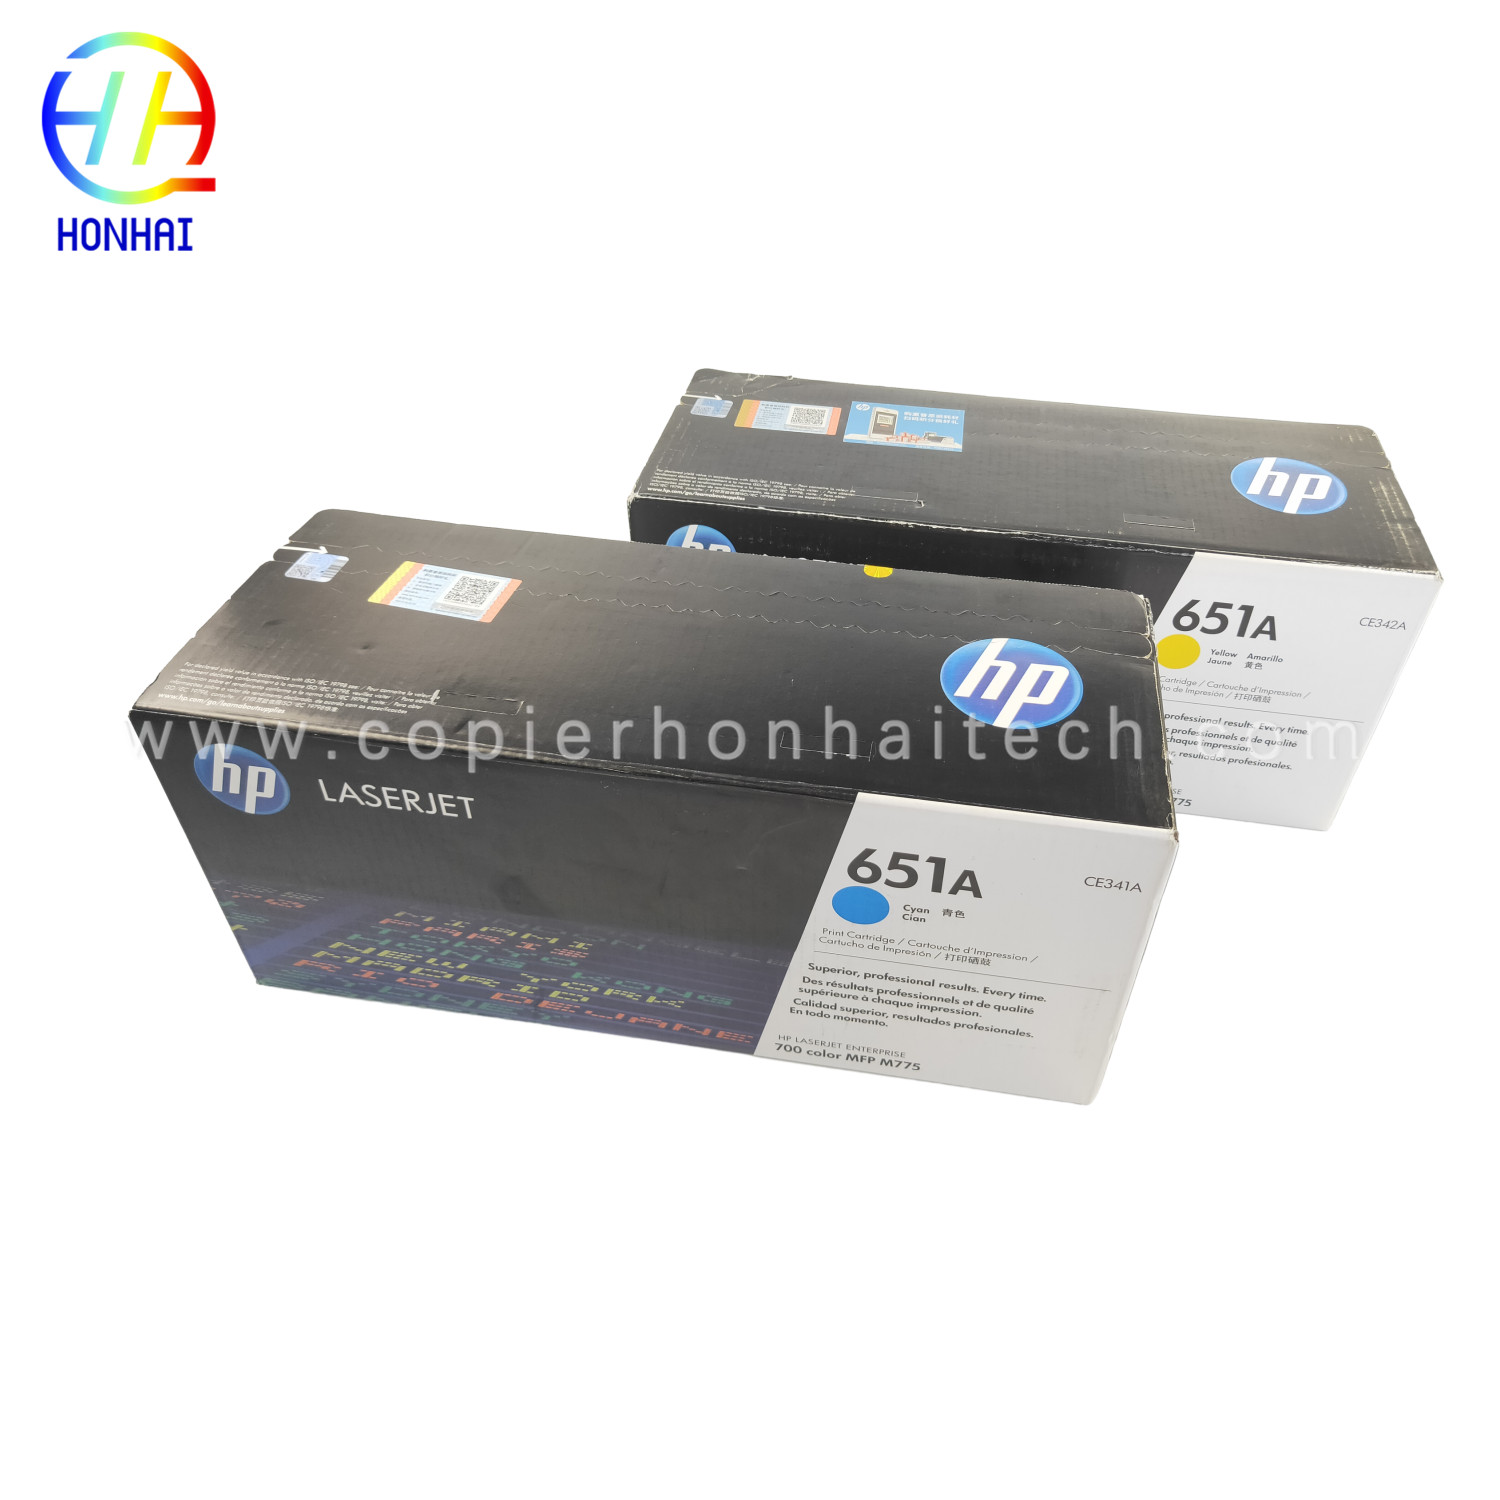 Original Toner Cartridge for HP LaserJet Enterprise 700 color MFP M775 Series 651A CE341A Cyan CE342AC Yellow 16000 page